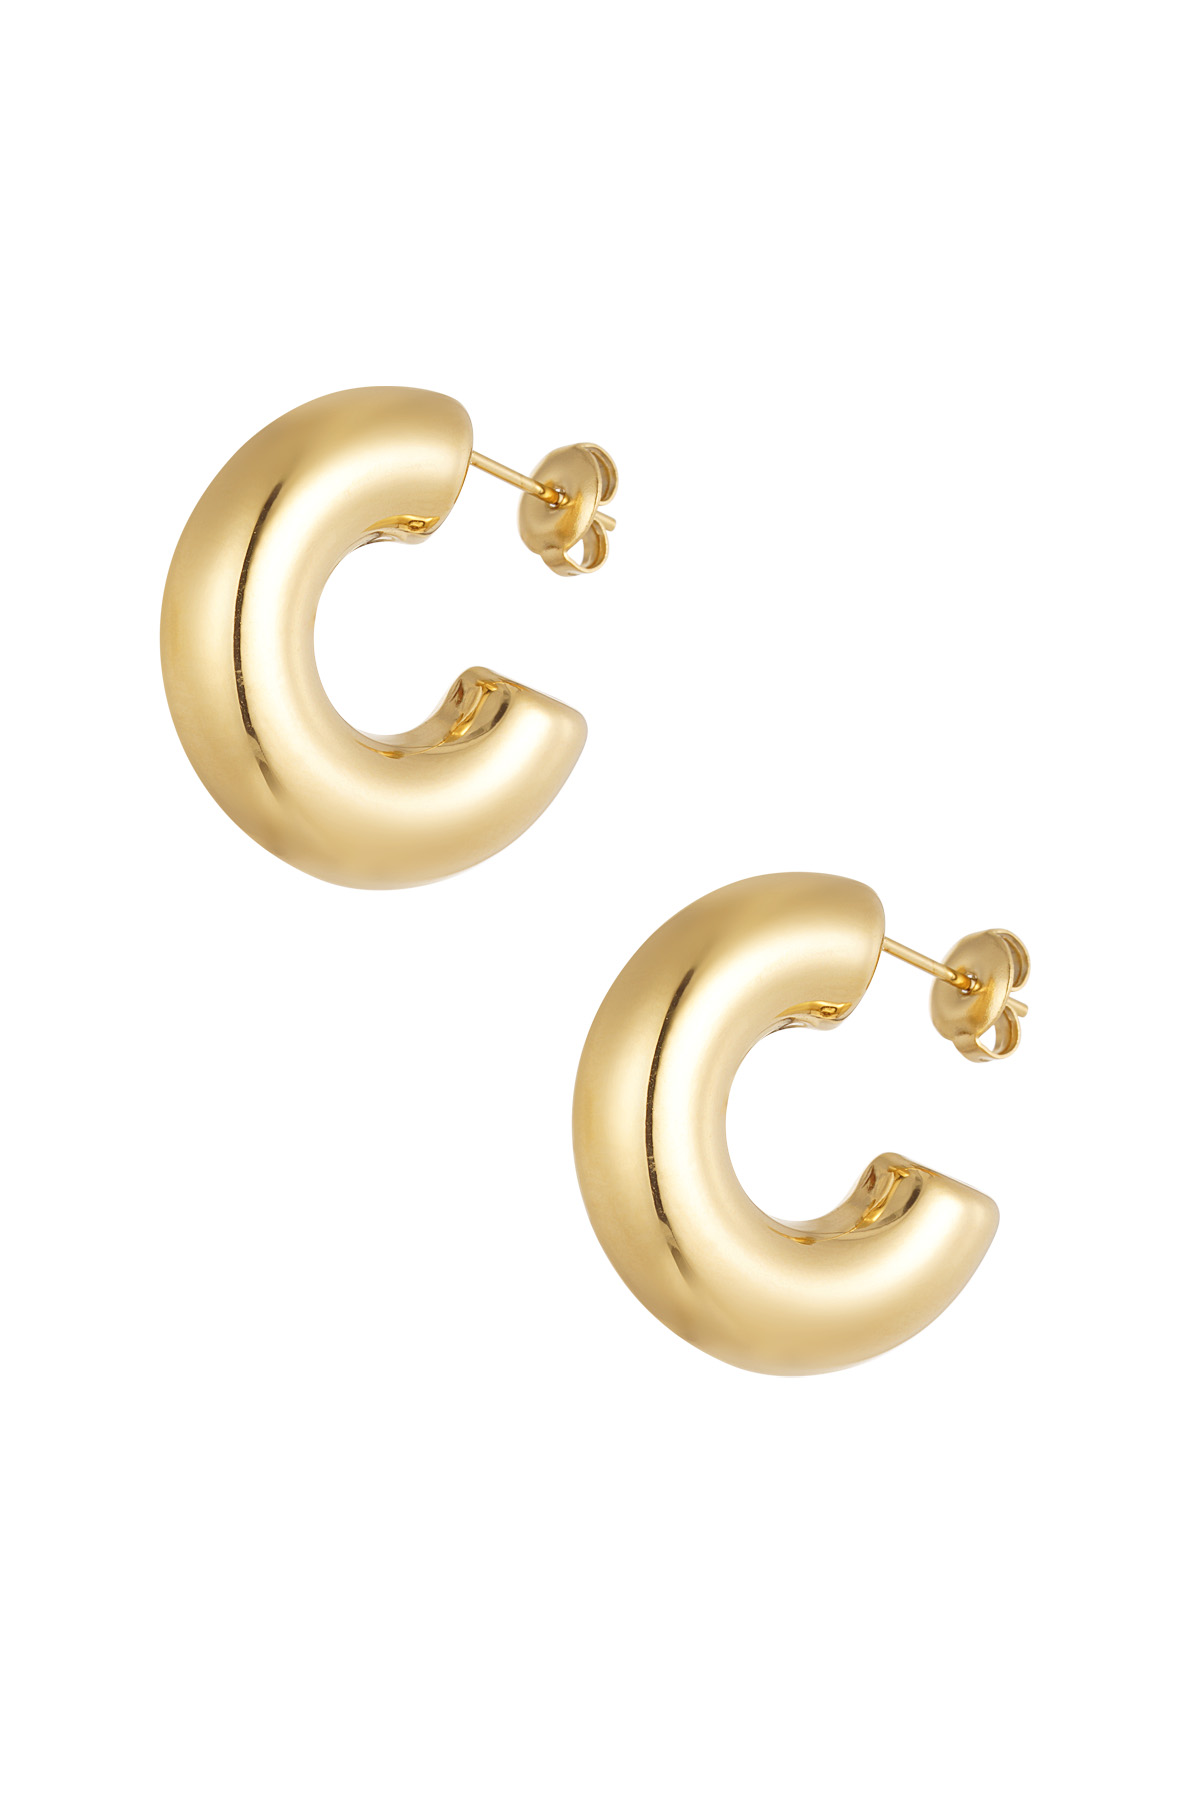 Earrings aesthetic basic half moon - gold